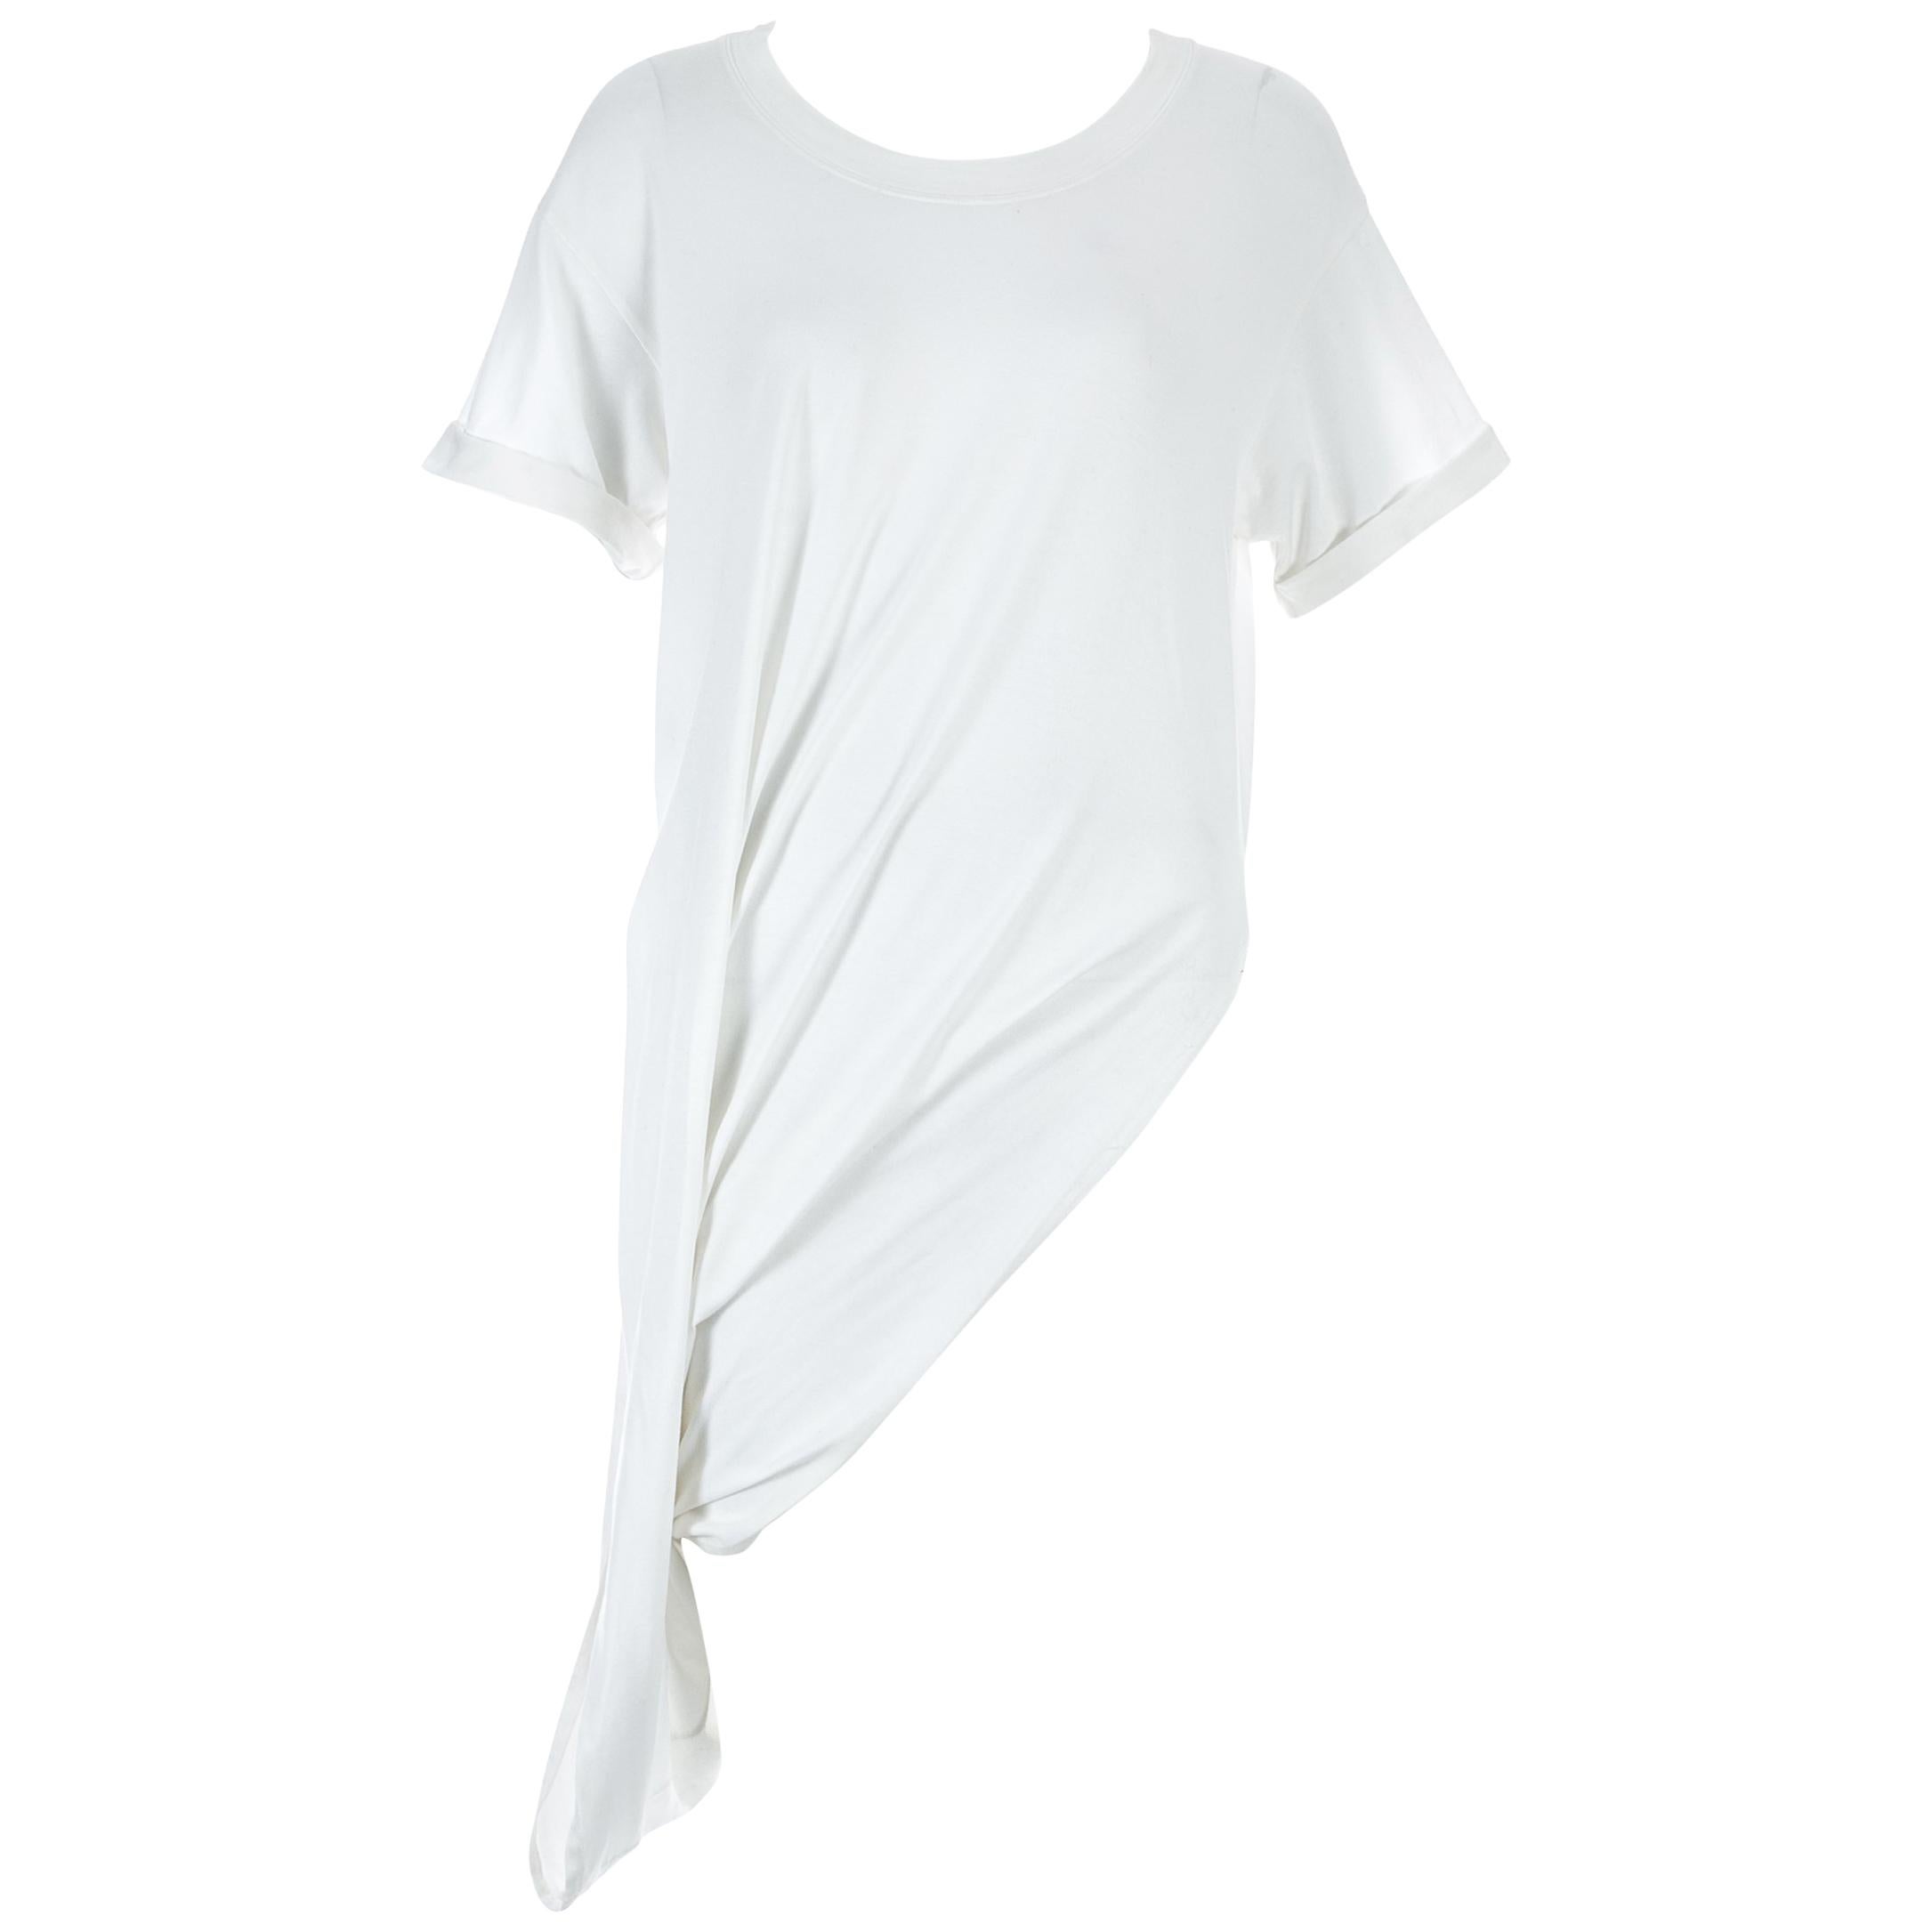 Margiela white cotton draped t-shirt, c. 2000s